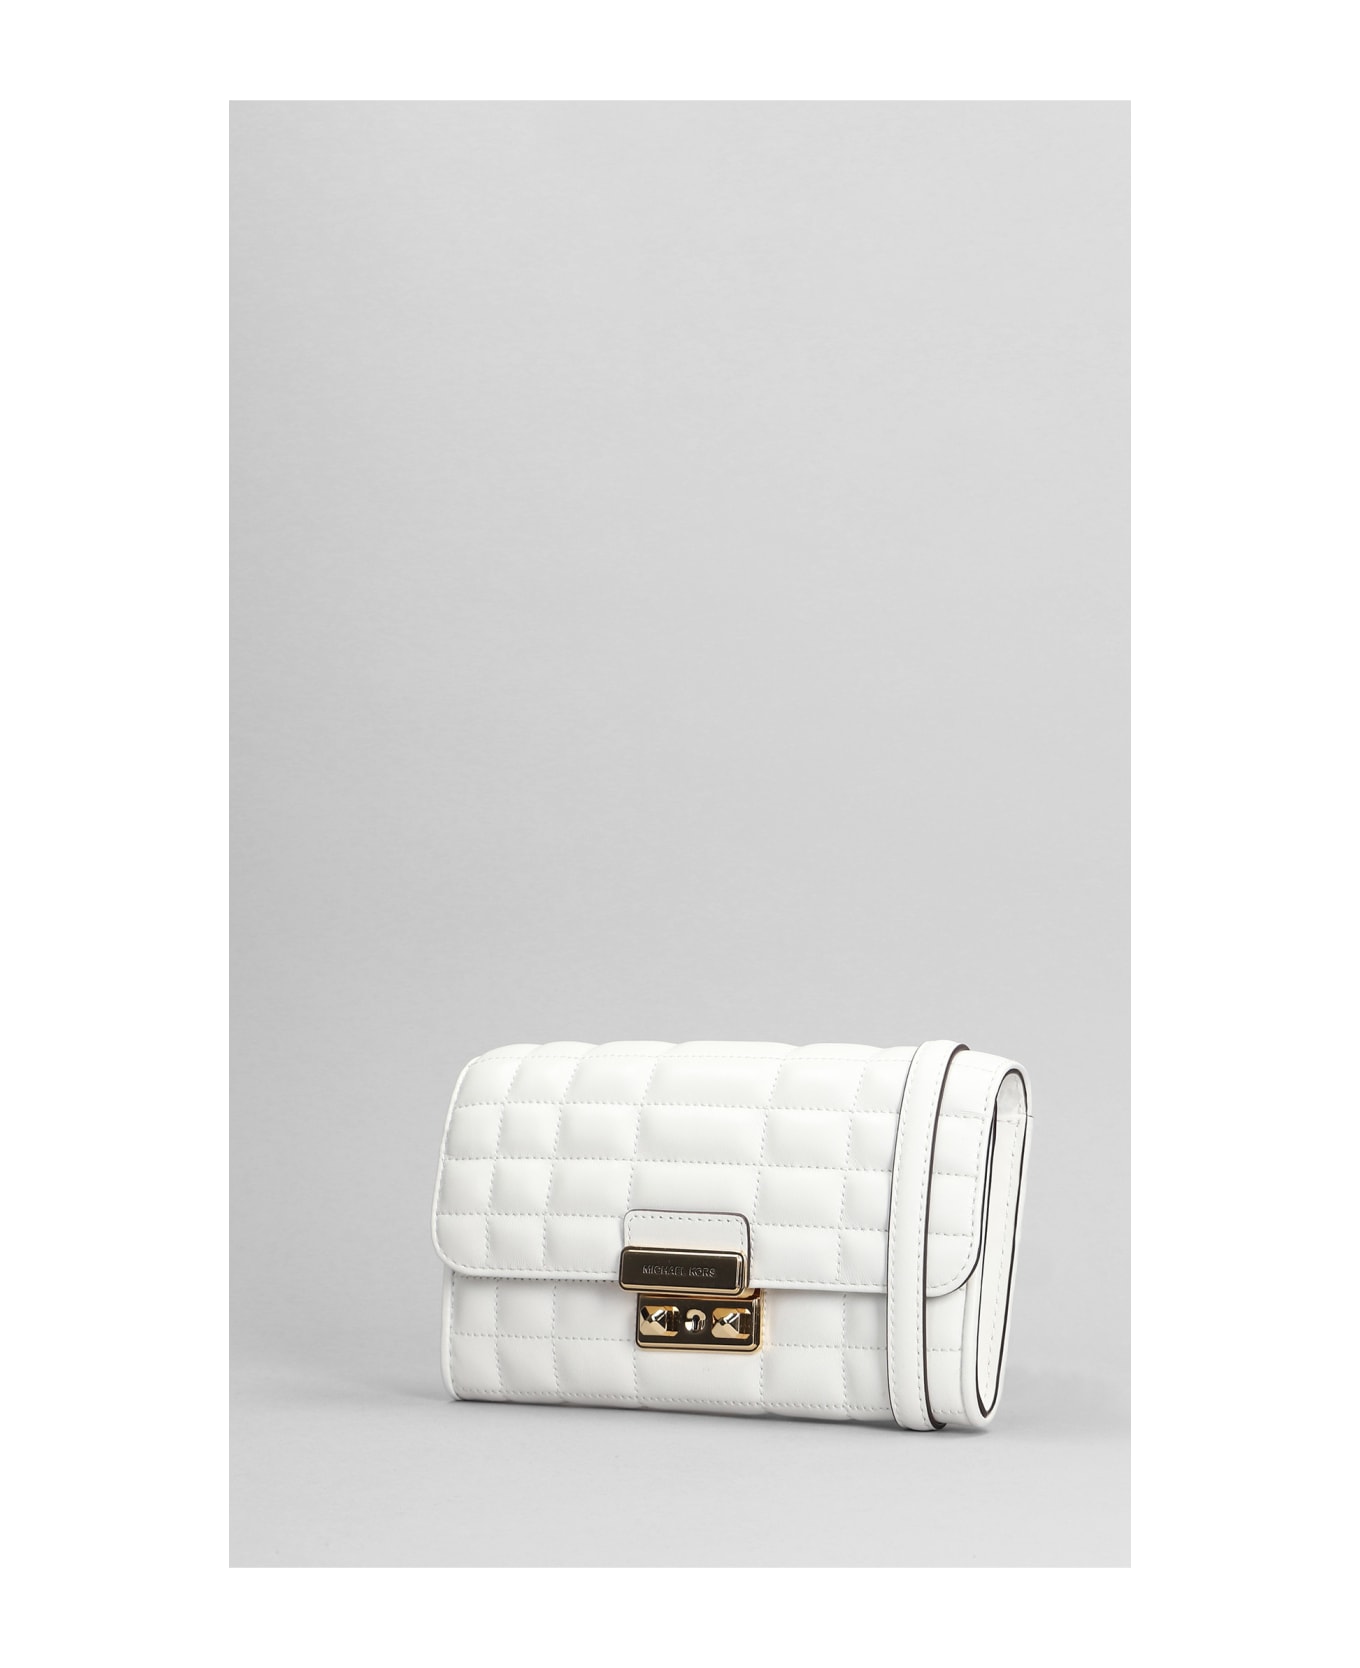 Michael Kors Tribeca Shoulder Bag In White Leather - white クラッチバッグ